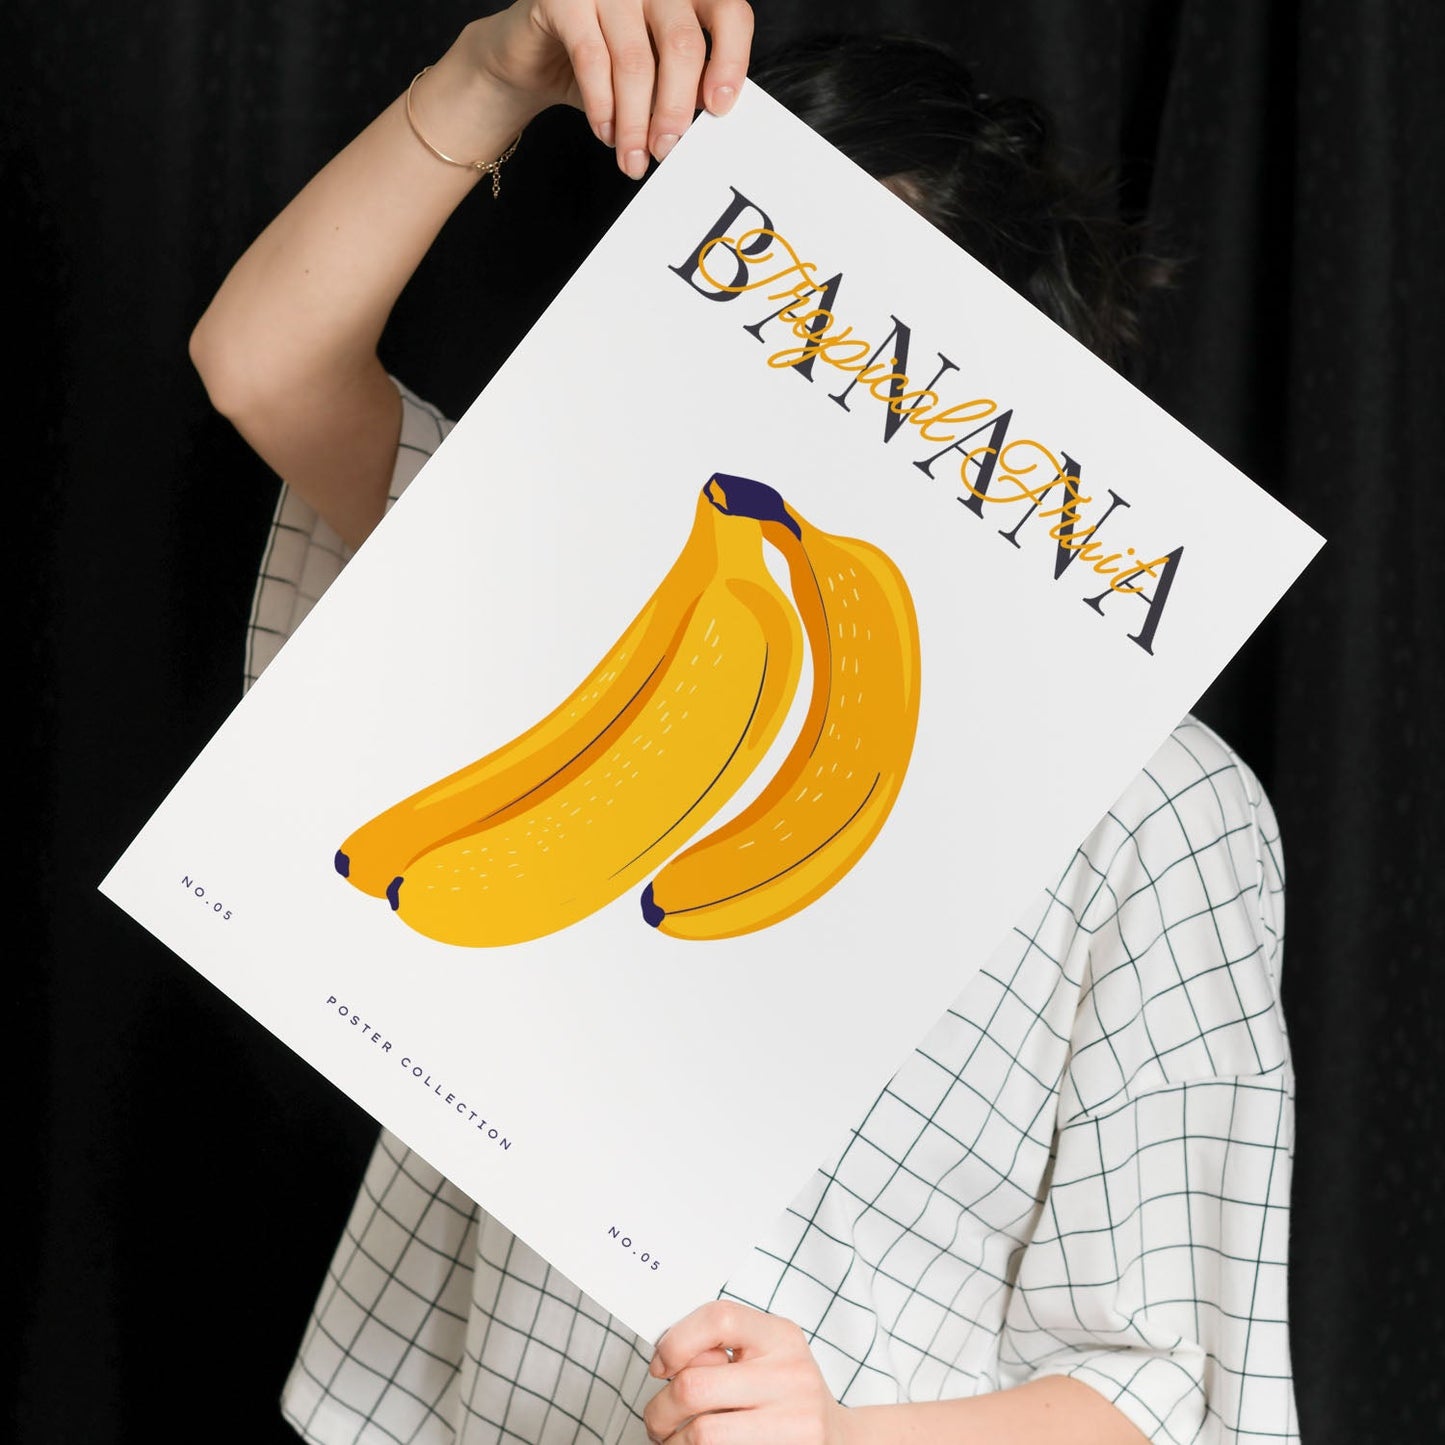 Banana-Artwork-Nacnic-Nacnic Estudio SL